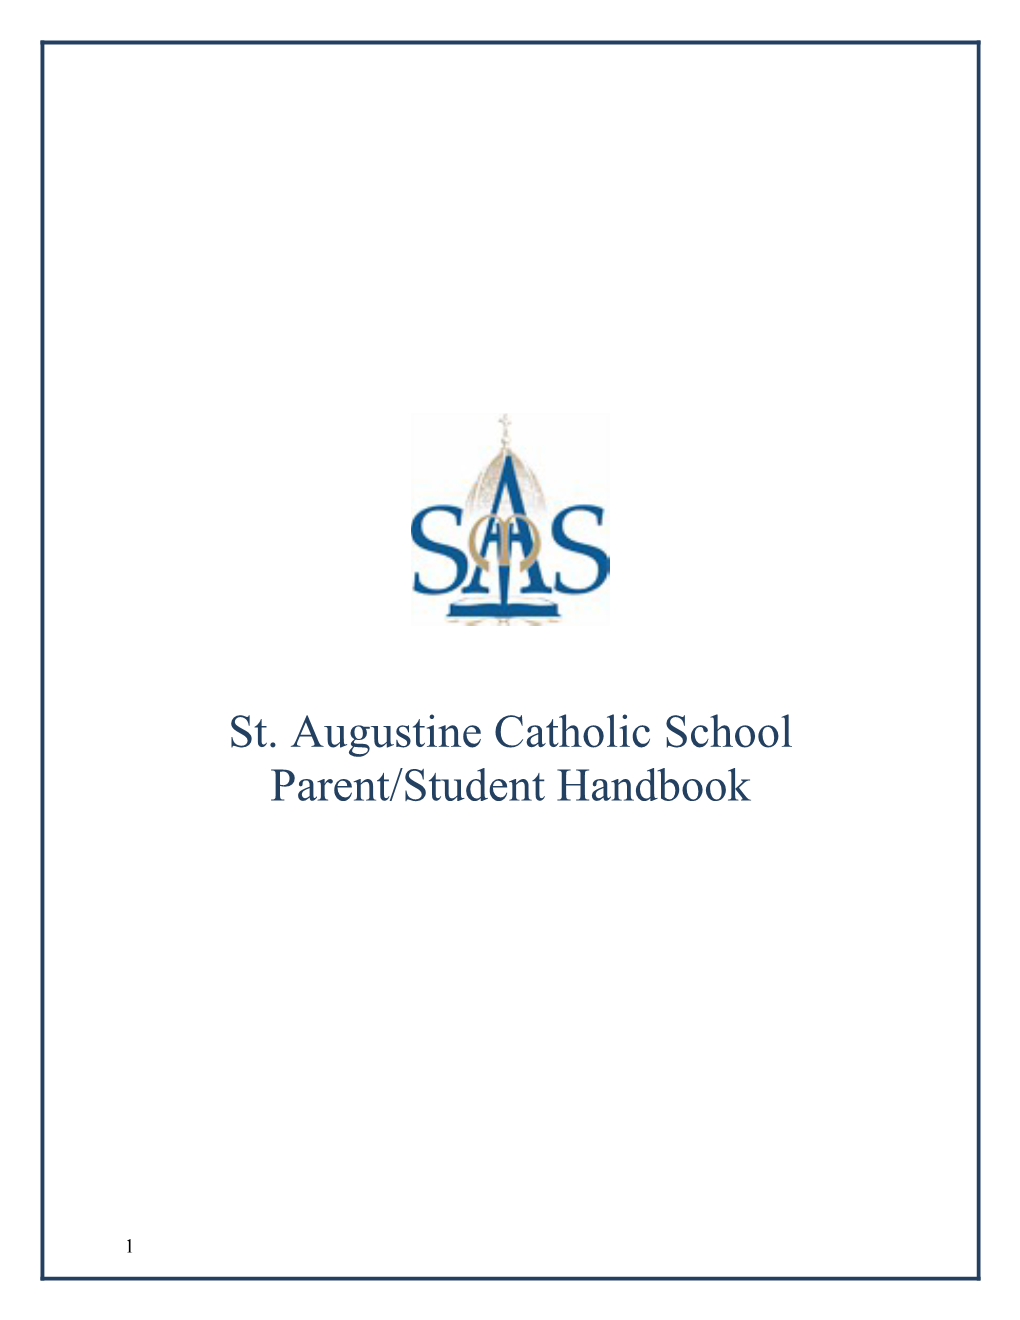 St. Augustine Catholic School Parent/Student Handbook